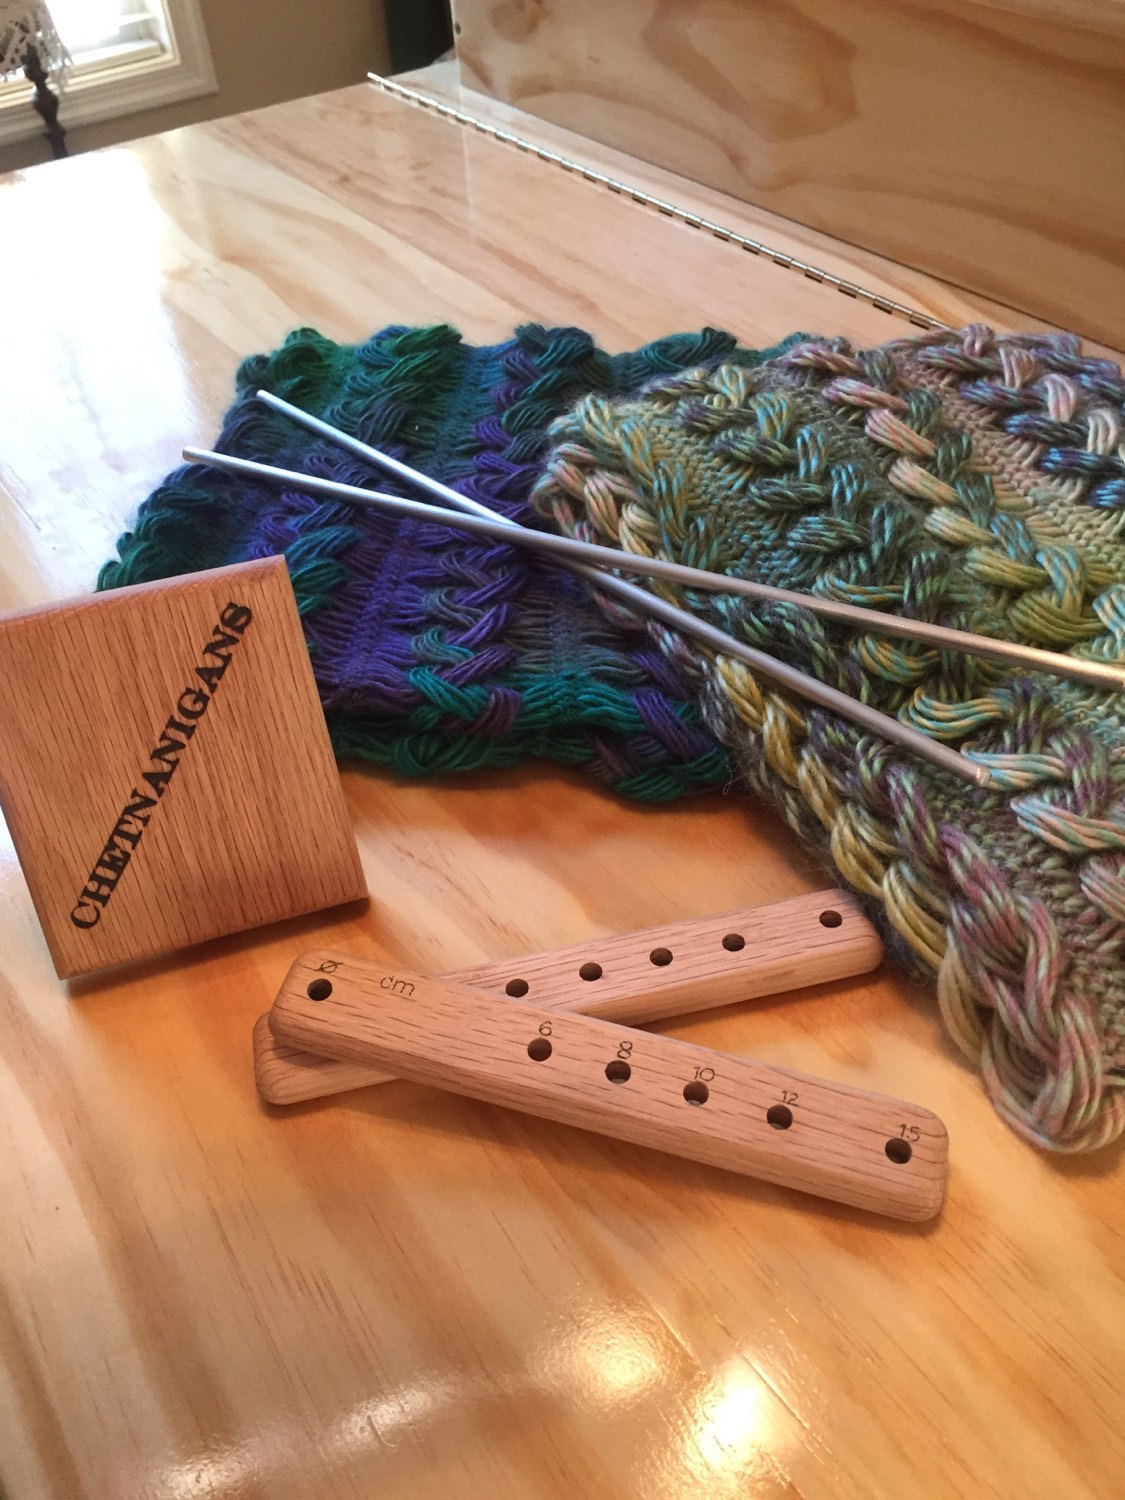 The BlocksAll Afghan / Granny Square Crochet Blocking Board